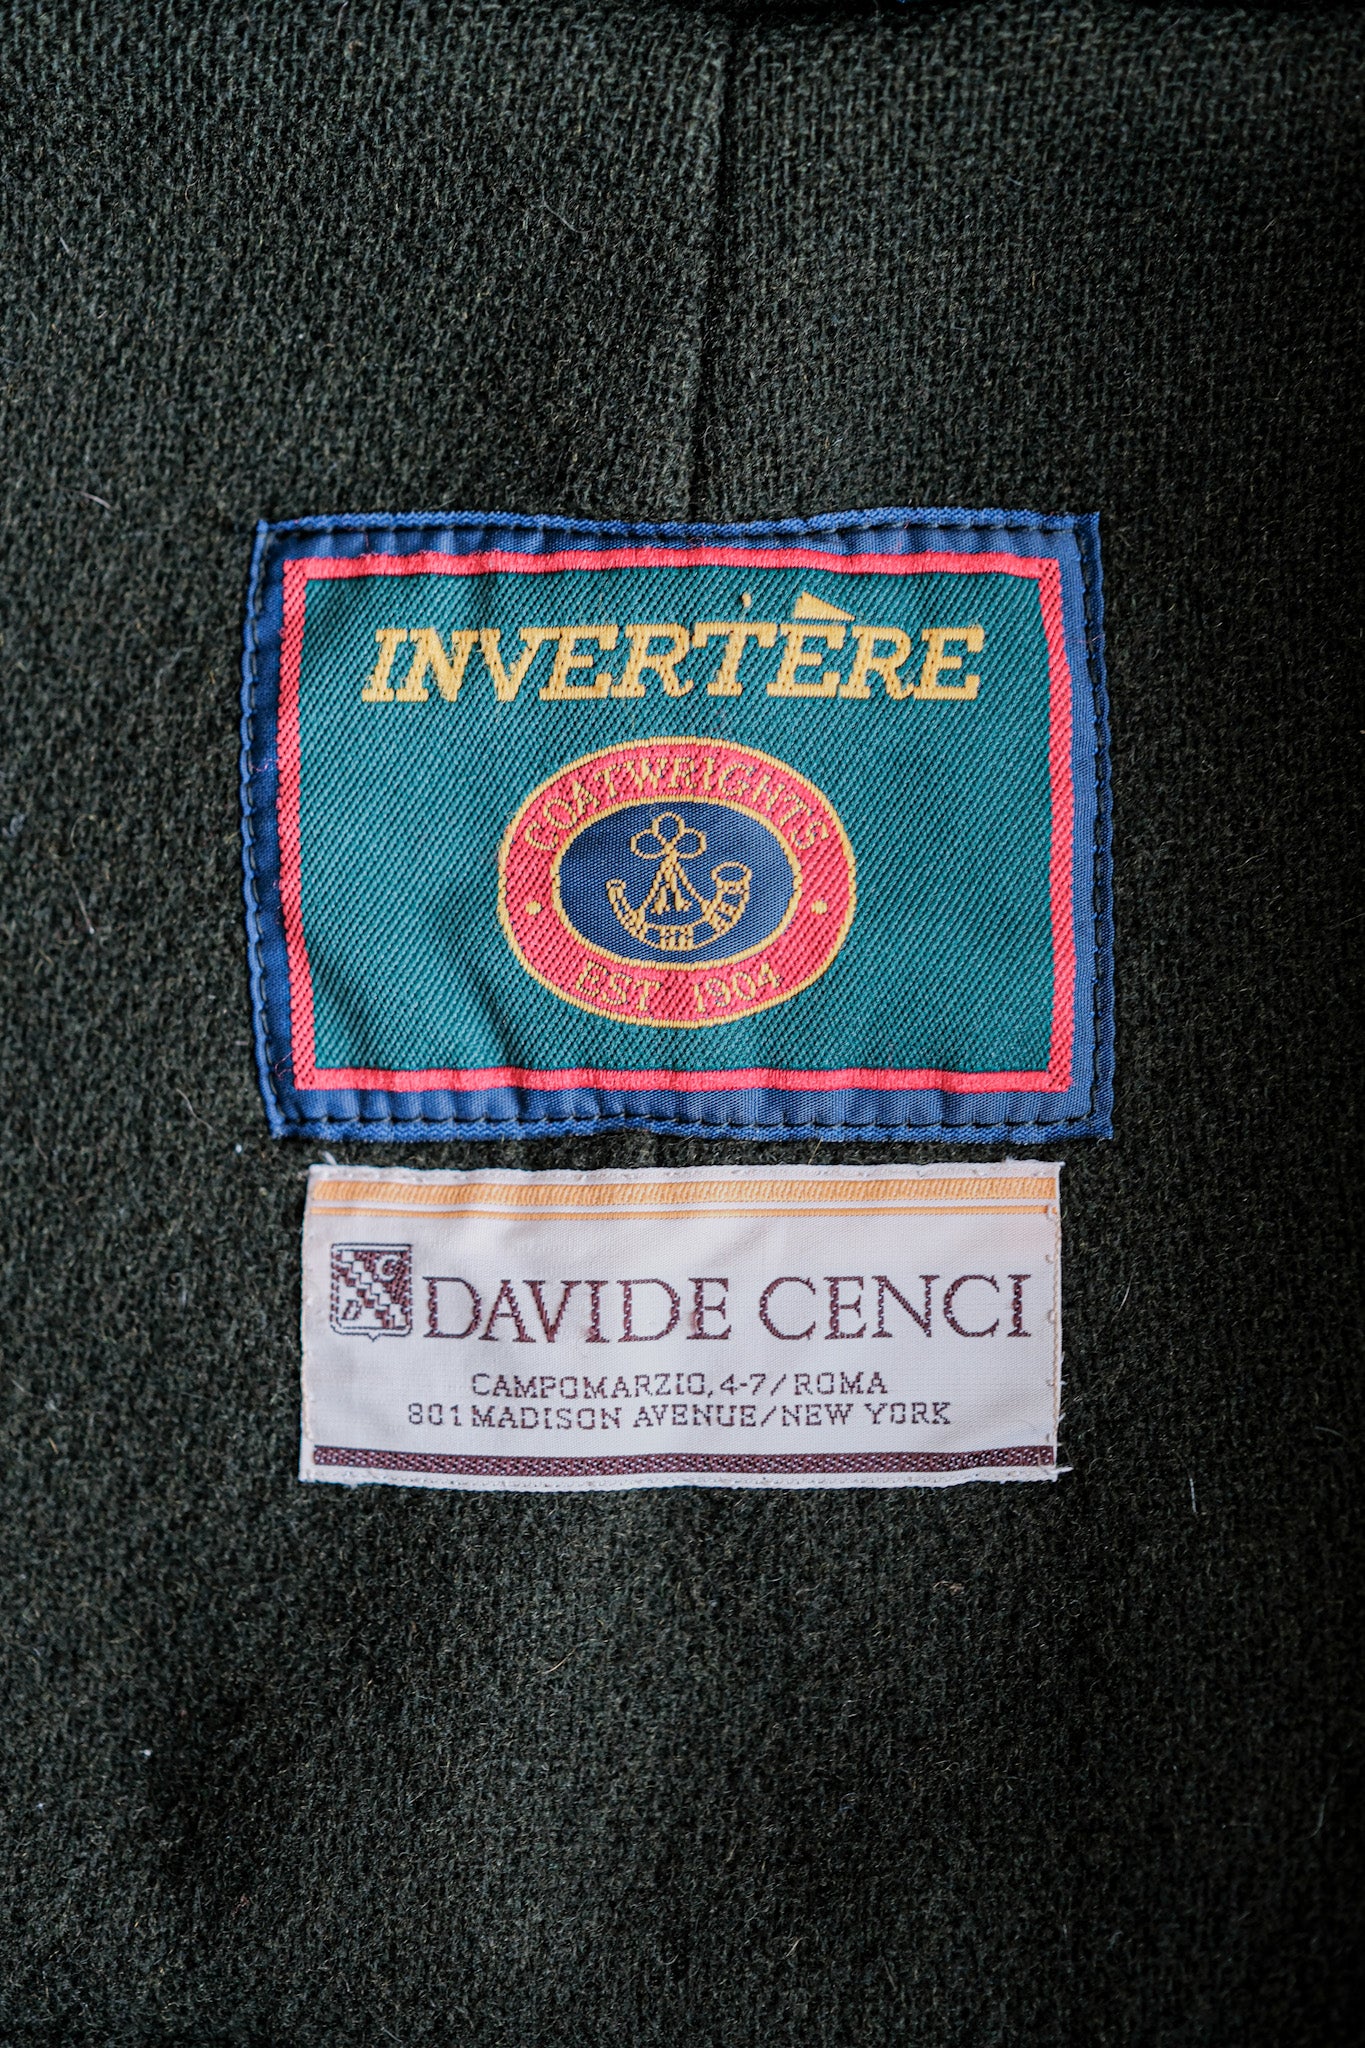 [~ 90's] Old Invertere HBT Wool Duffle COAT "Moorbrook" "Davide Cenci separate Note"